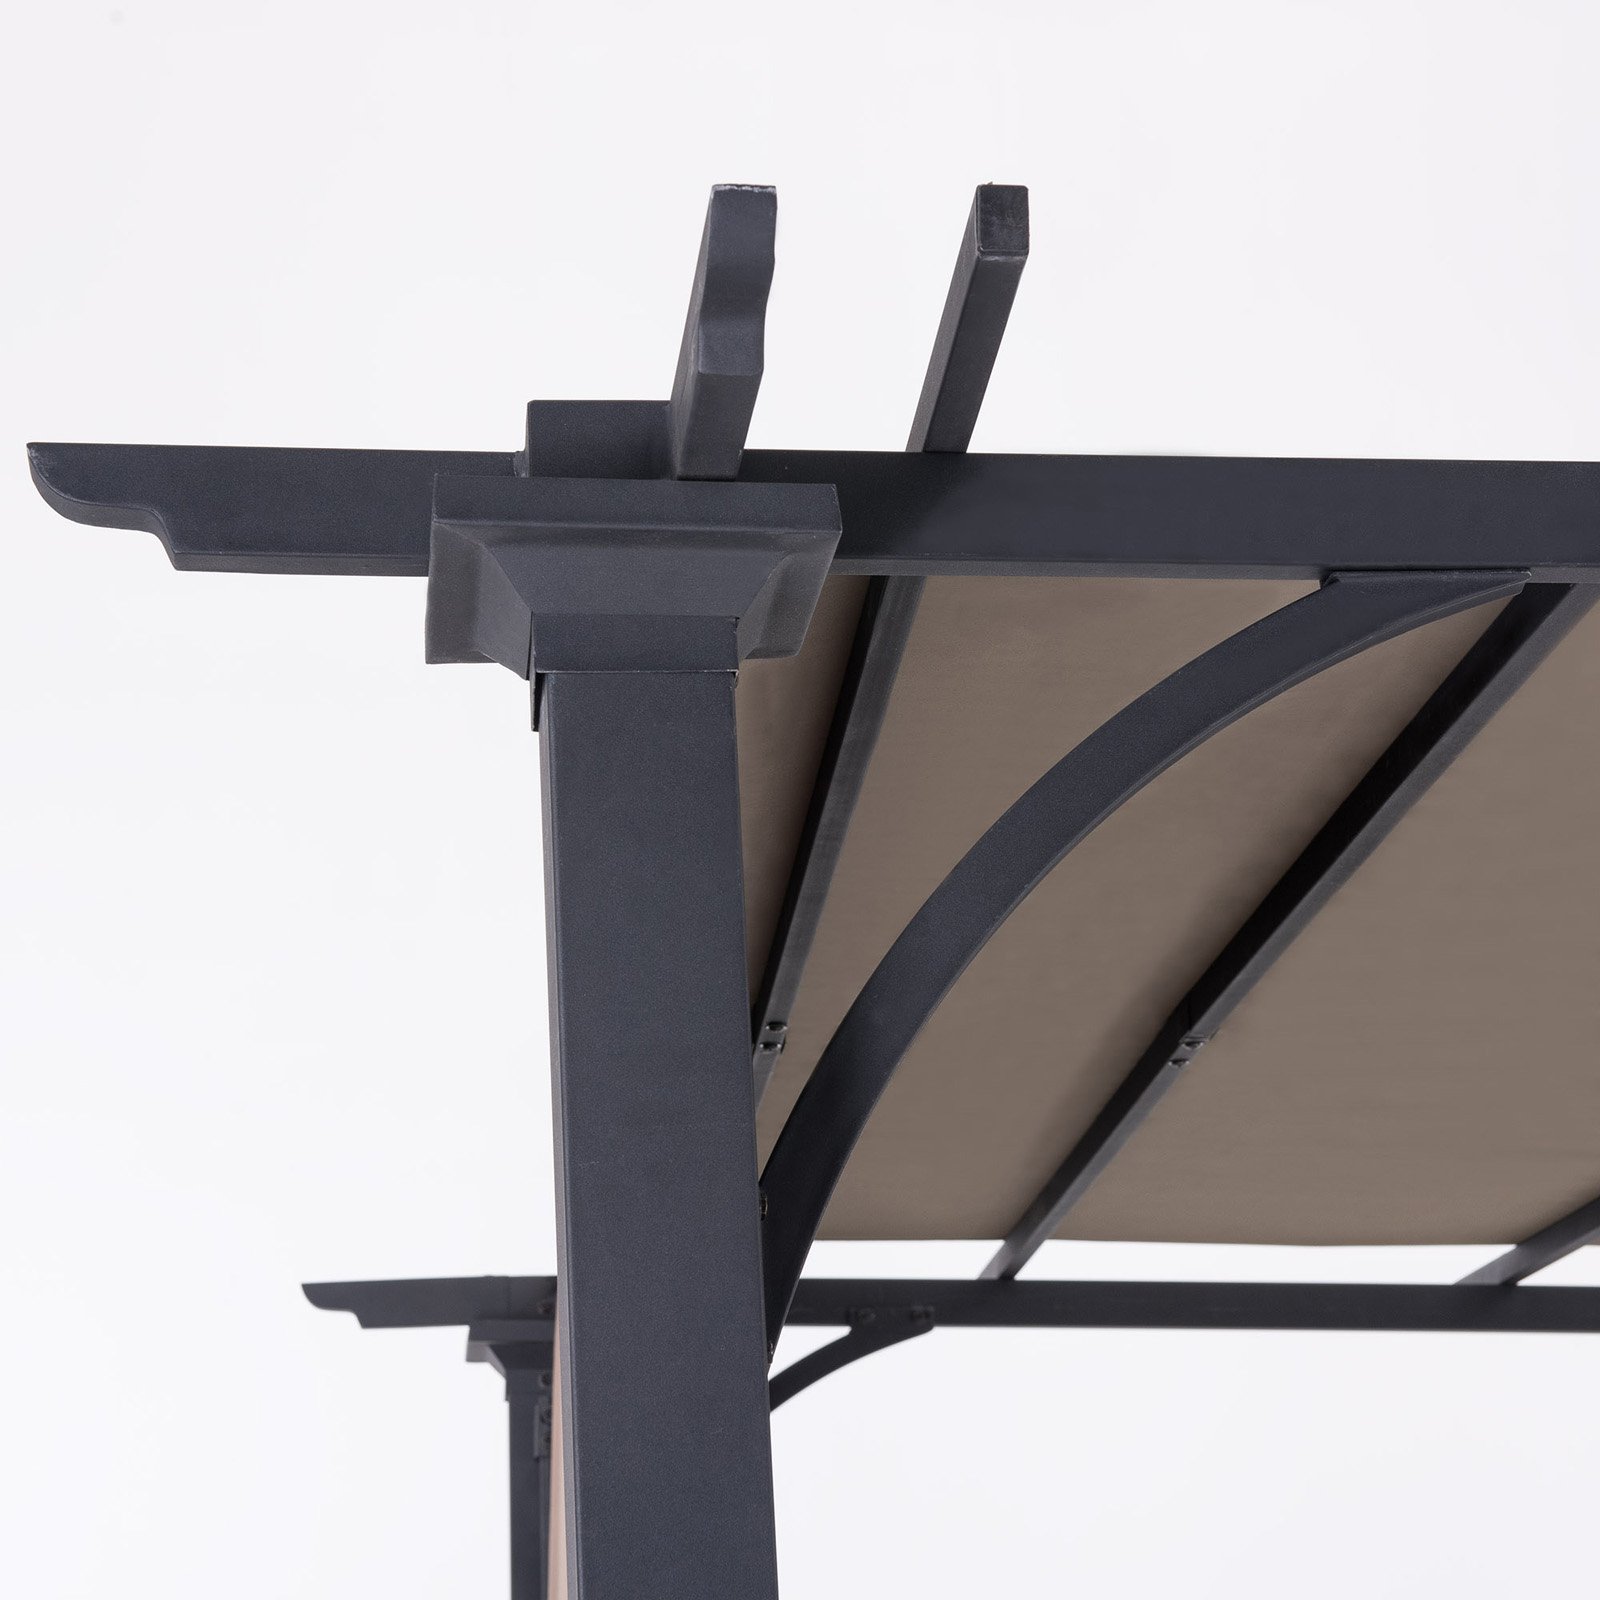 Sunjoy Doubleton Pergola with Canopy, Steel Patio Shade Gazebo 8' x 10', Brown - image 4 of 10